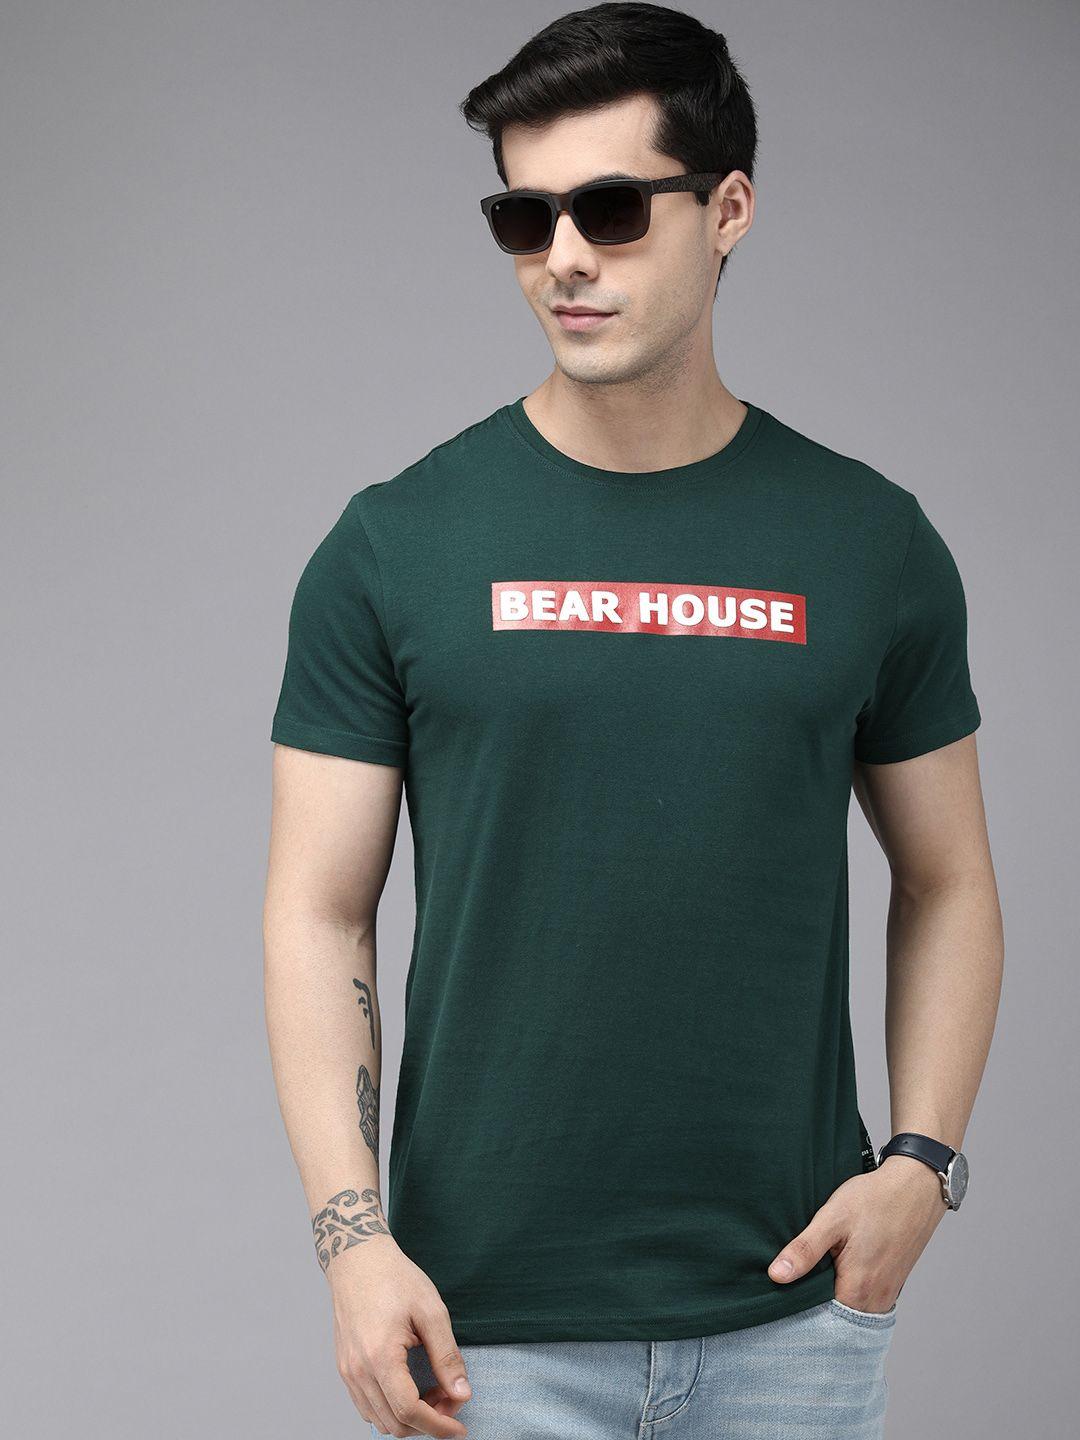 the-bear-house-men-green-brand-logo-printed-pure-cotton-slim-fit-t-shirt